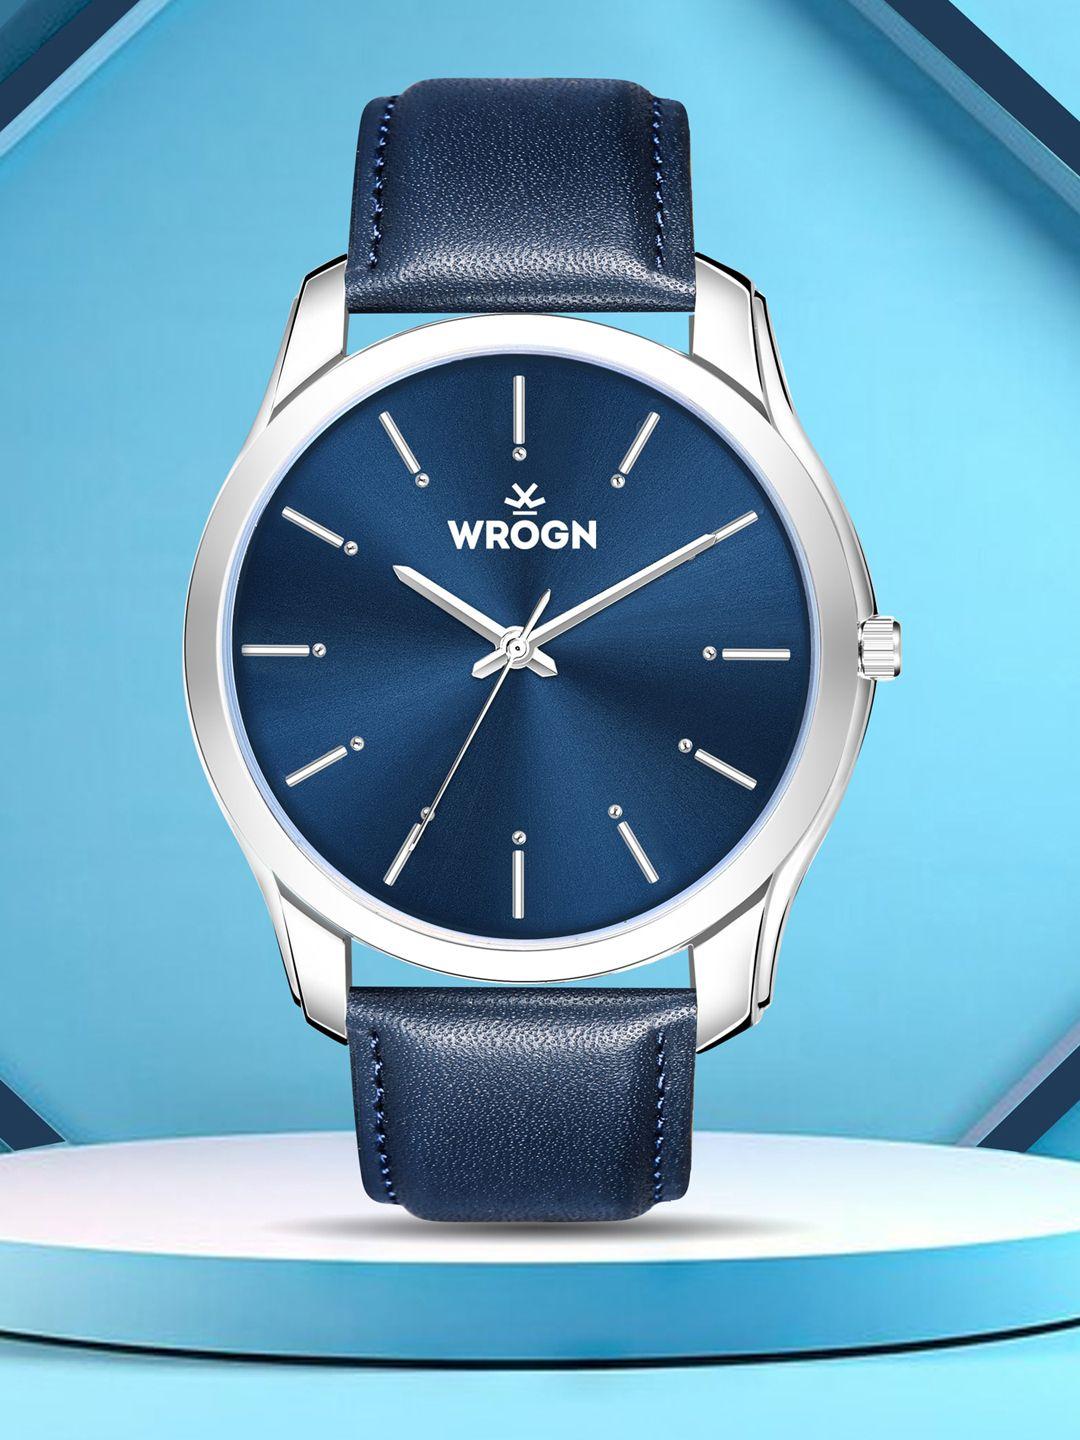 wrogn men brass embellished dial & leather embellished straps analogue watch wr-6603-blue